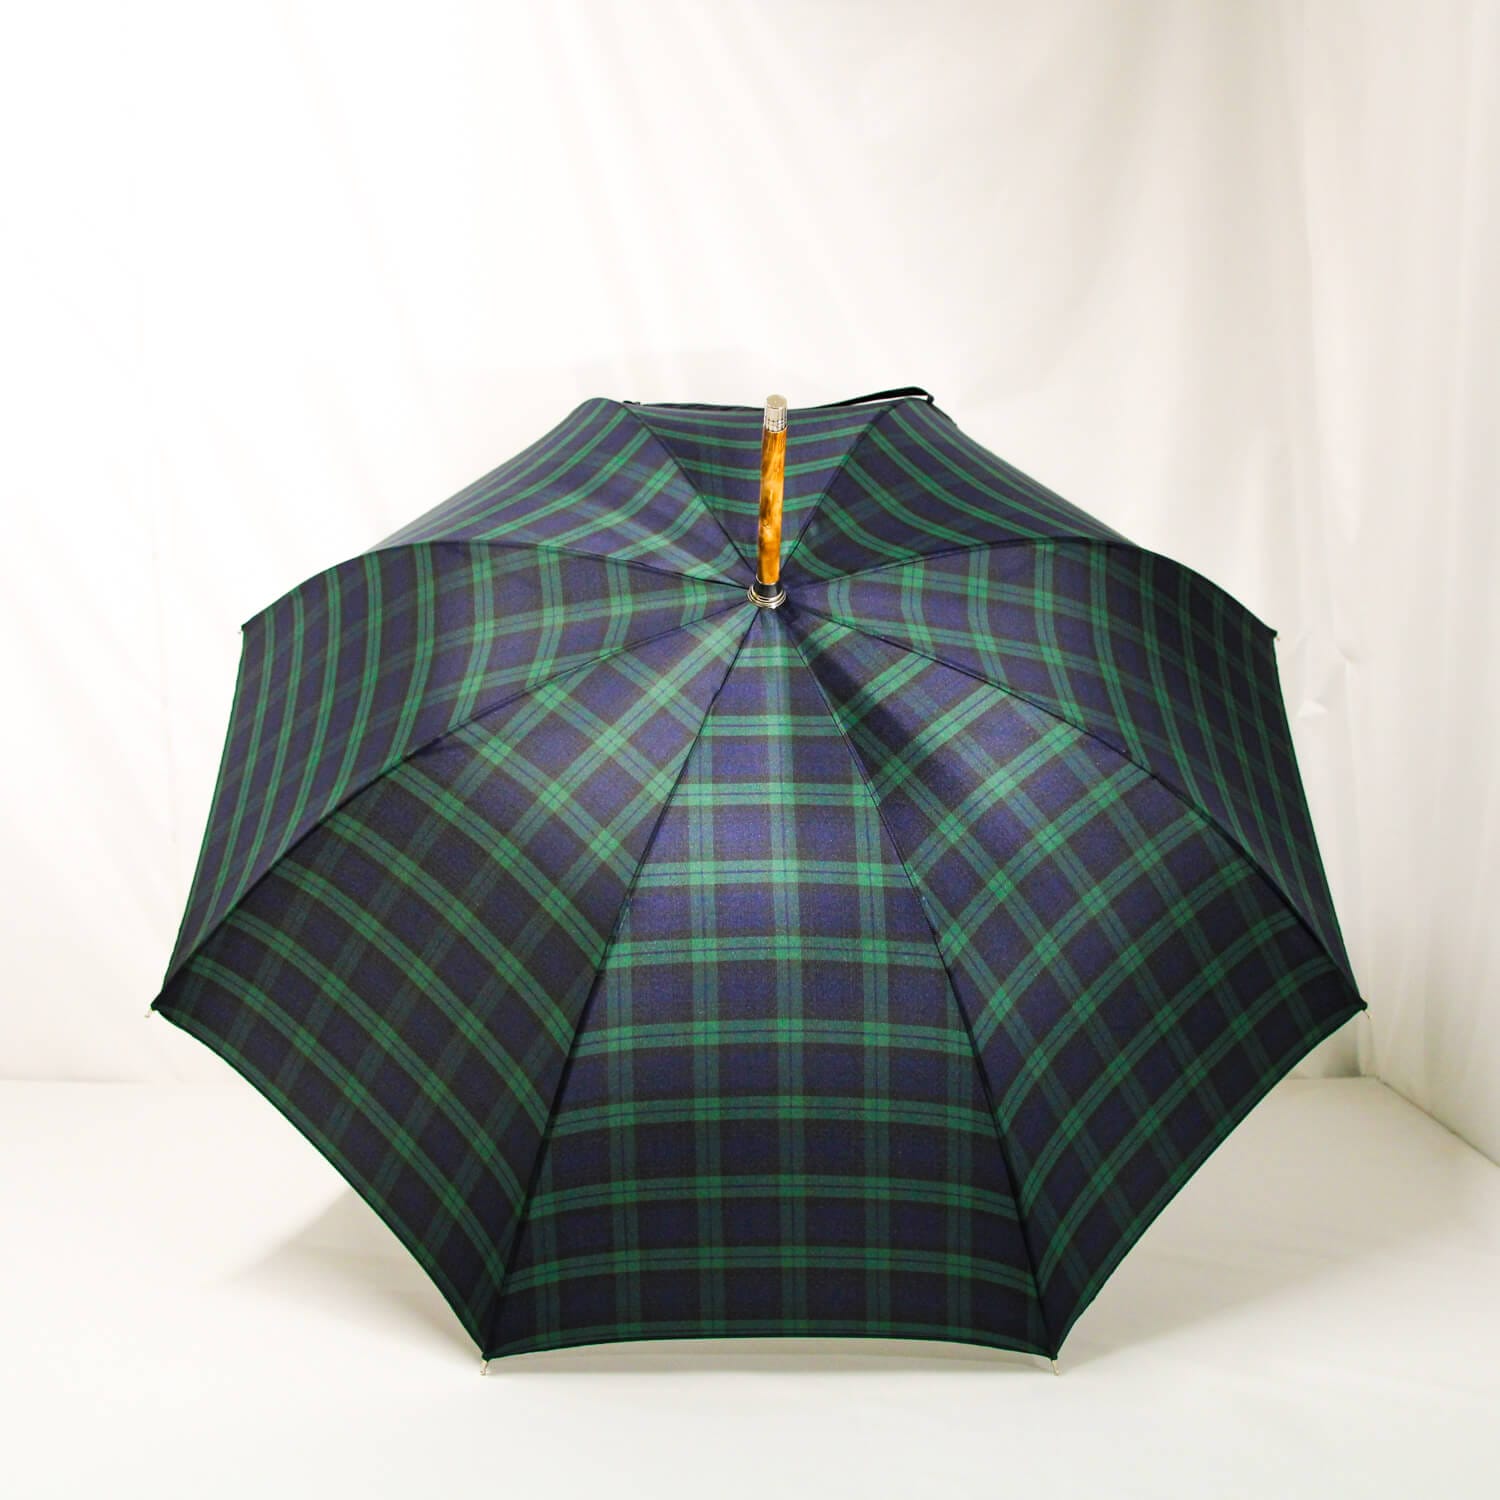 Parapluie anglais écossais vert et bleu